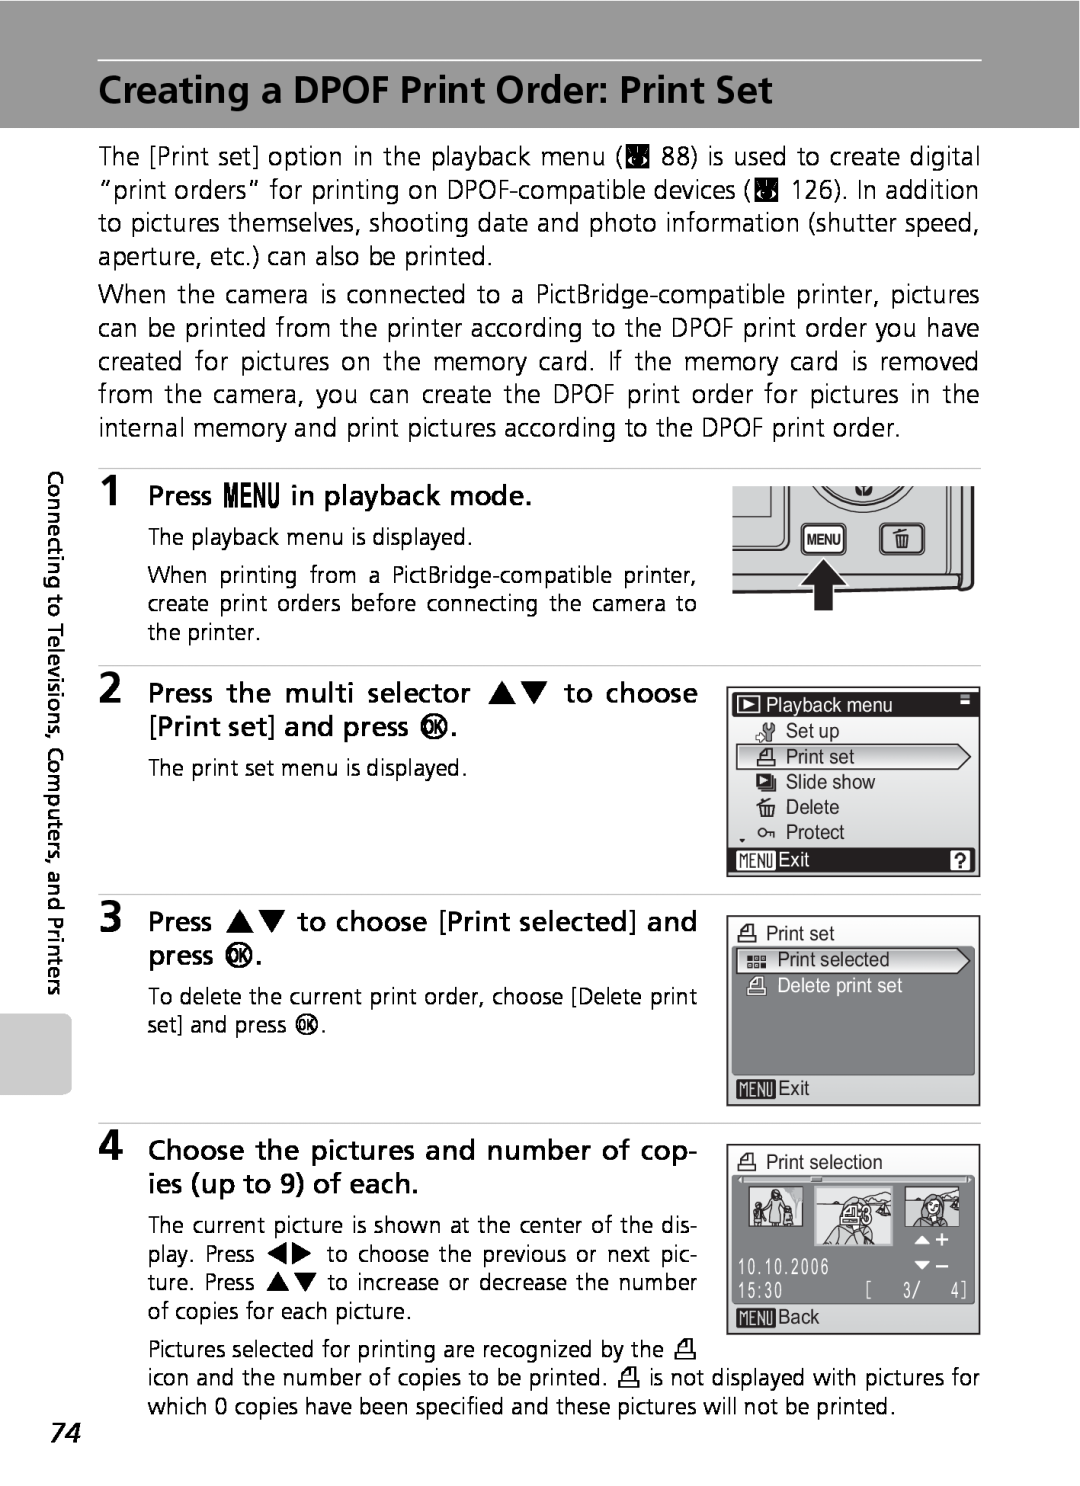 Nikon S9 Creating a DPOF Print Order: Print Set, Press m in playback mode, Press GH to choose Print selected and, press d 